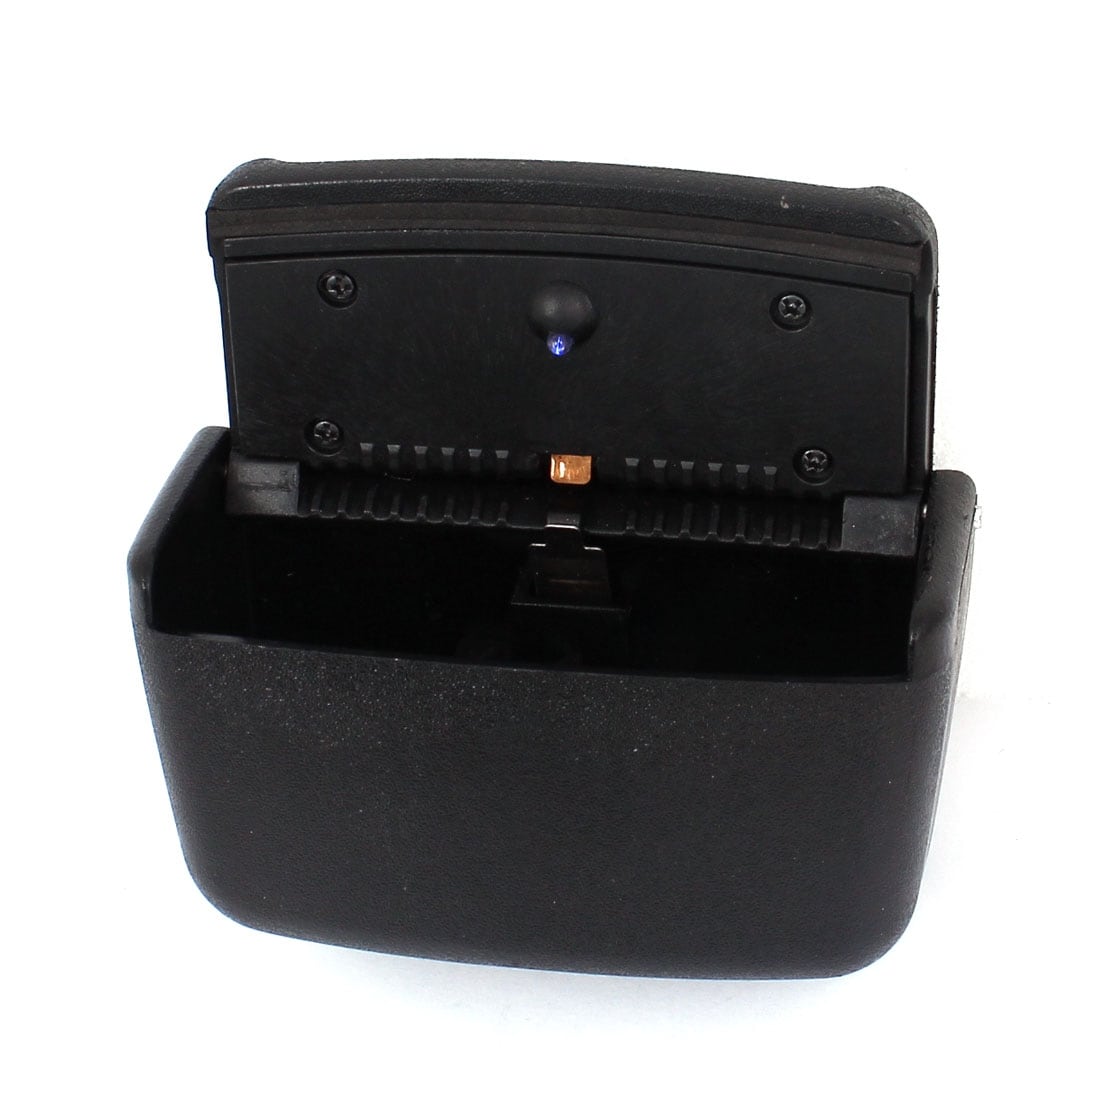 Portable Plastic Rectangle Designed Smokeless Ashtray for Car,with Blue LED Light - Black